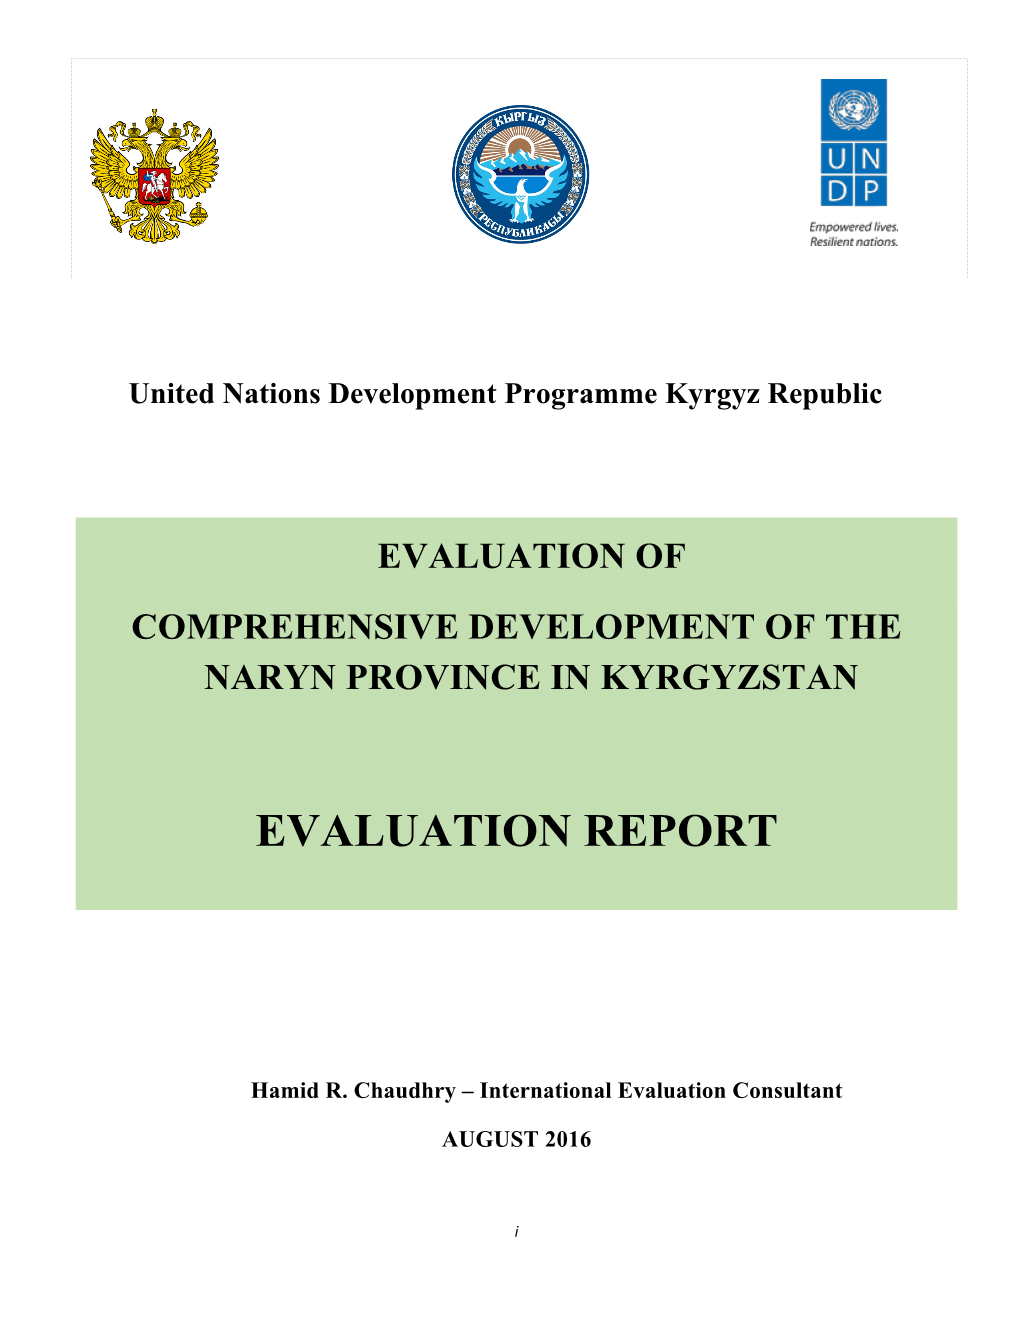 Evaluation Report on Naryn ABD Aug 2016.Pdf